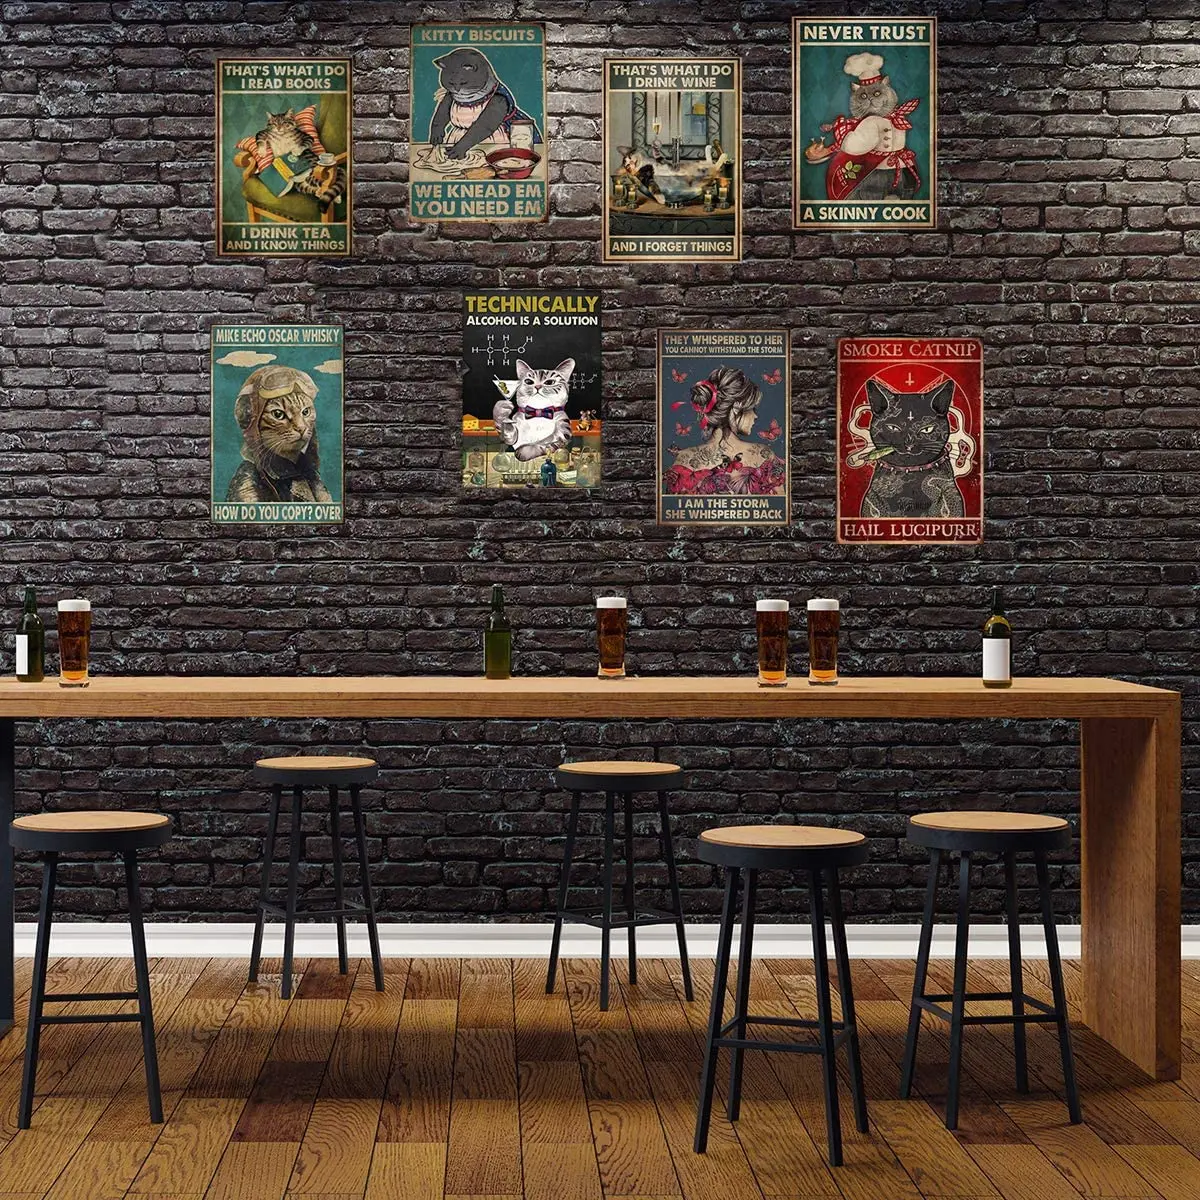 

Bulldog tin Sign Vintage Metal Pub Club Cafe bar Home Wall Art Decoration Poster Retro 8x12 inches